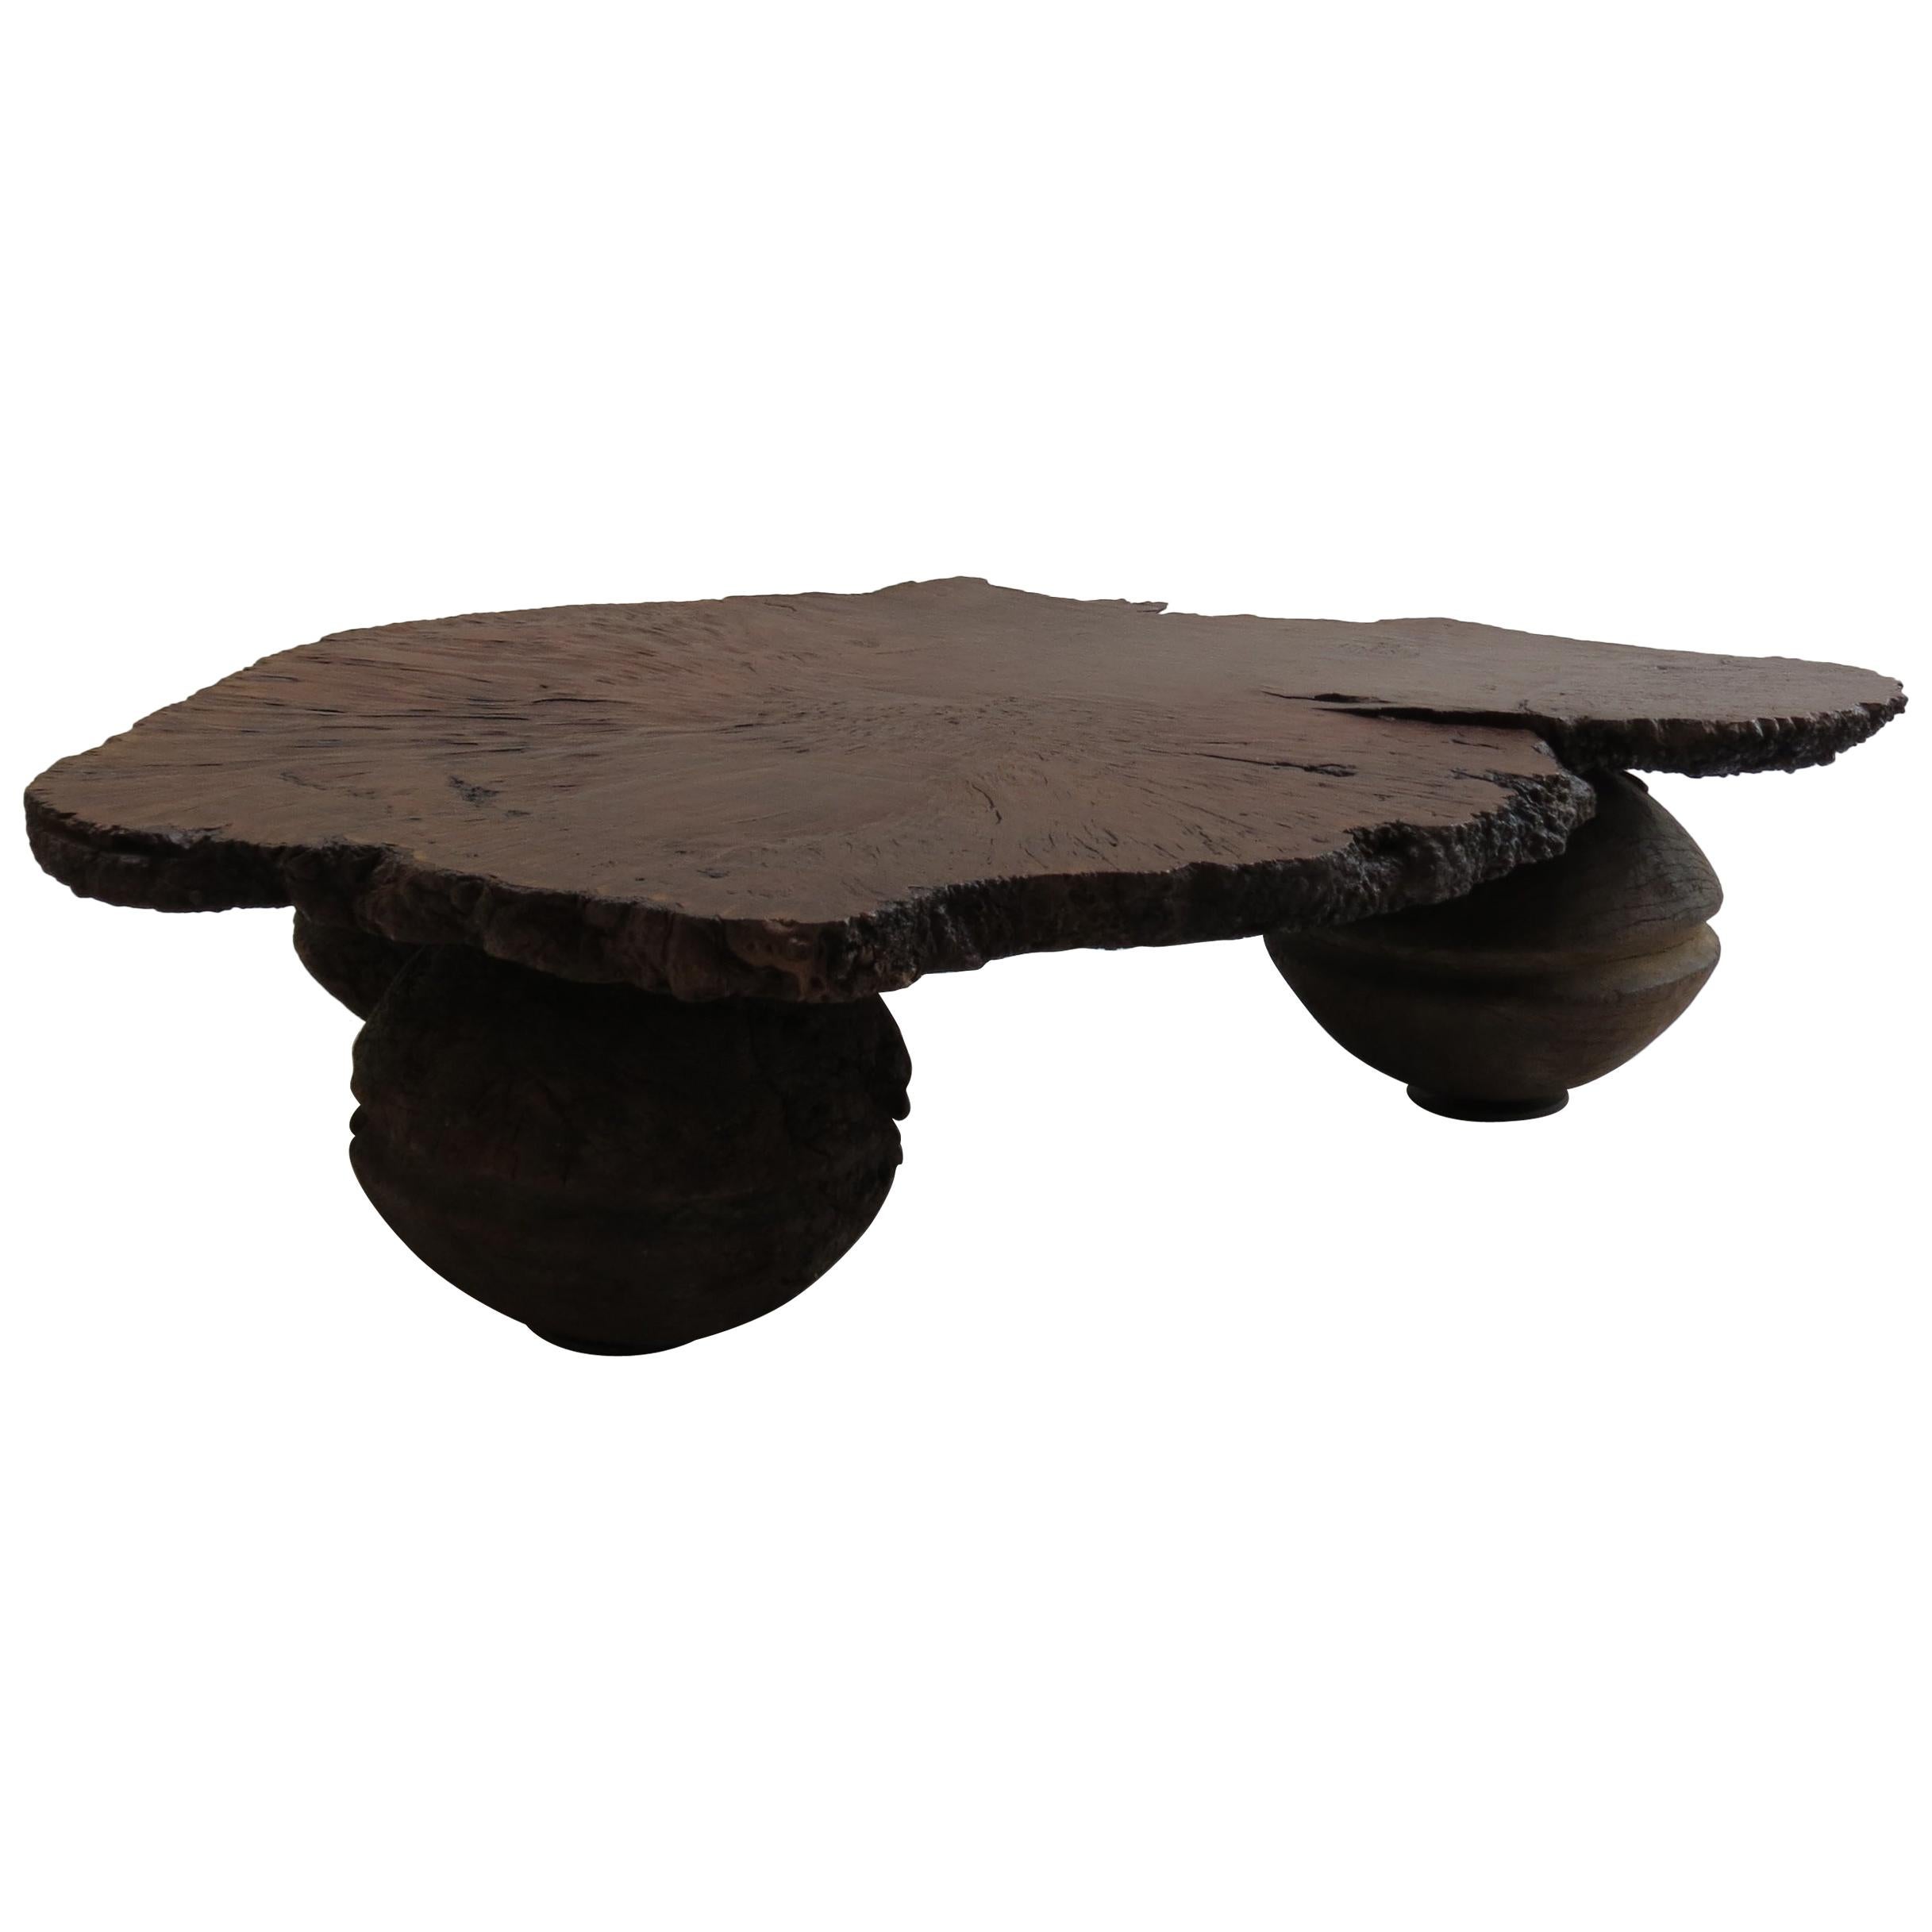 Naturalistic Bespoke Karri Burr Wood and Antique Wooden Base Table